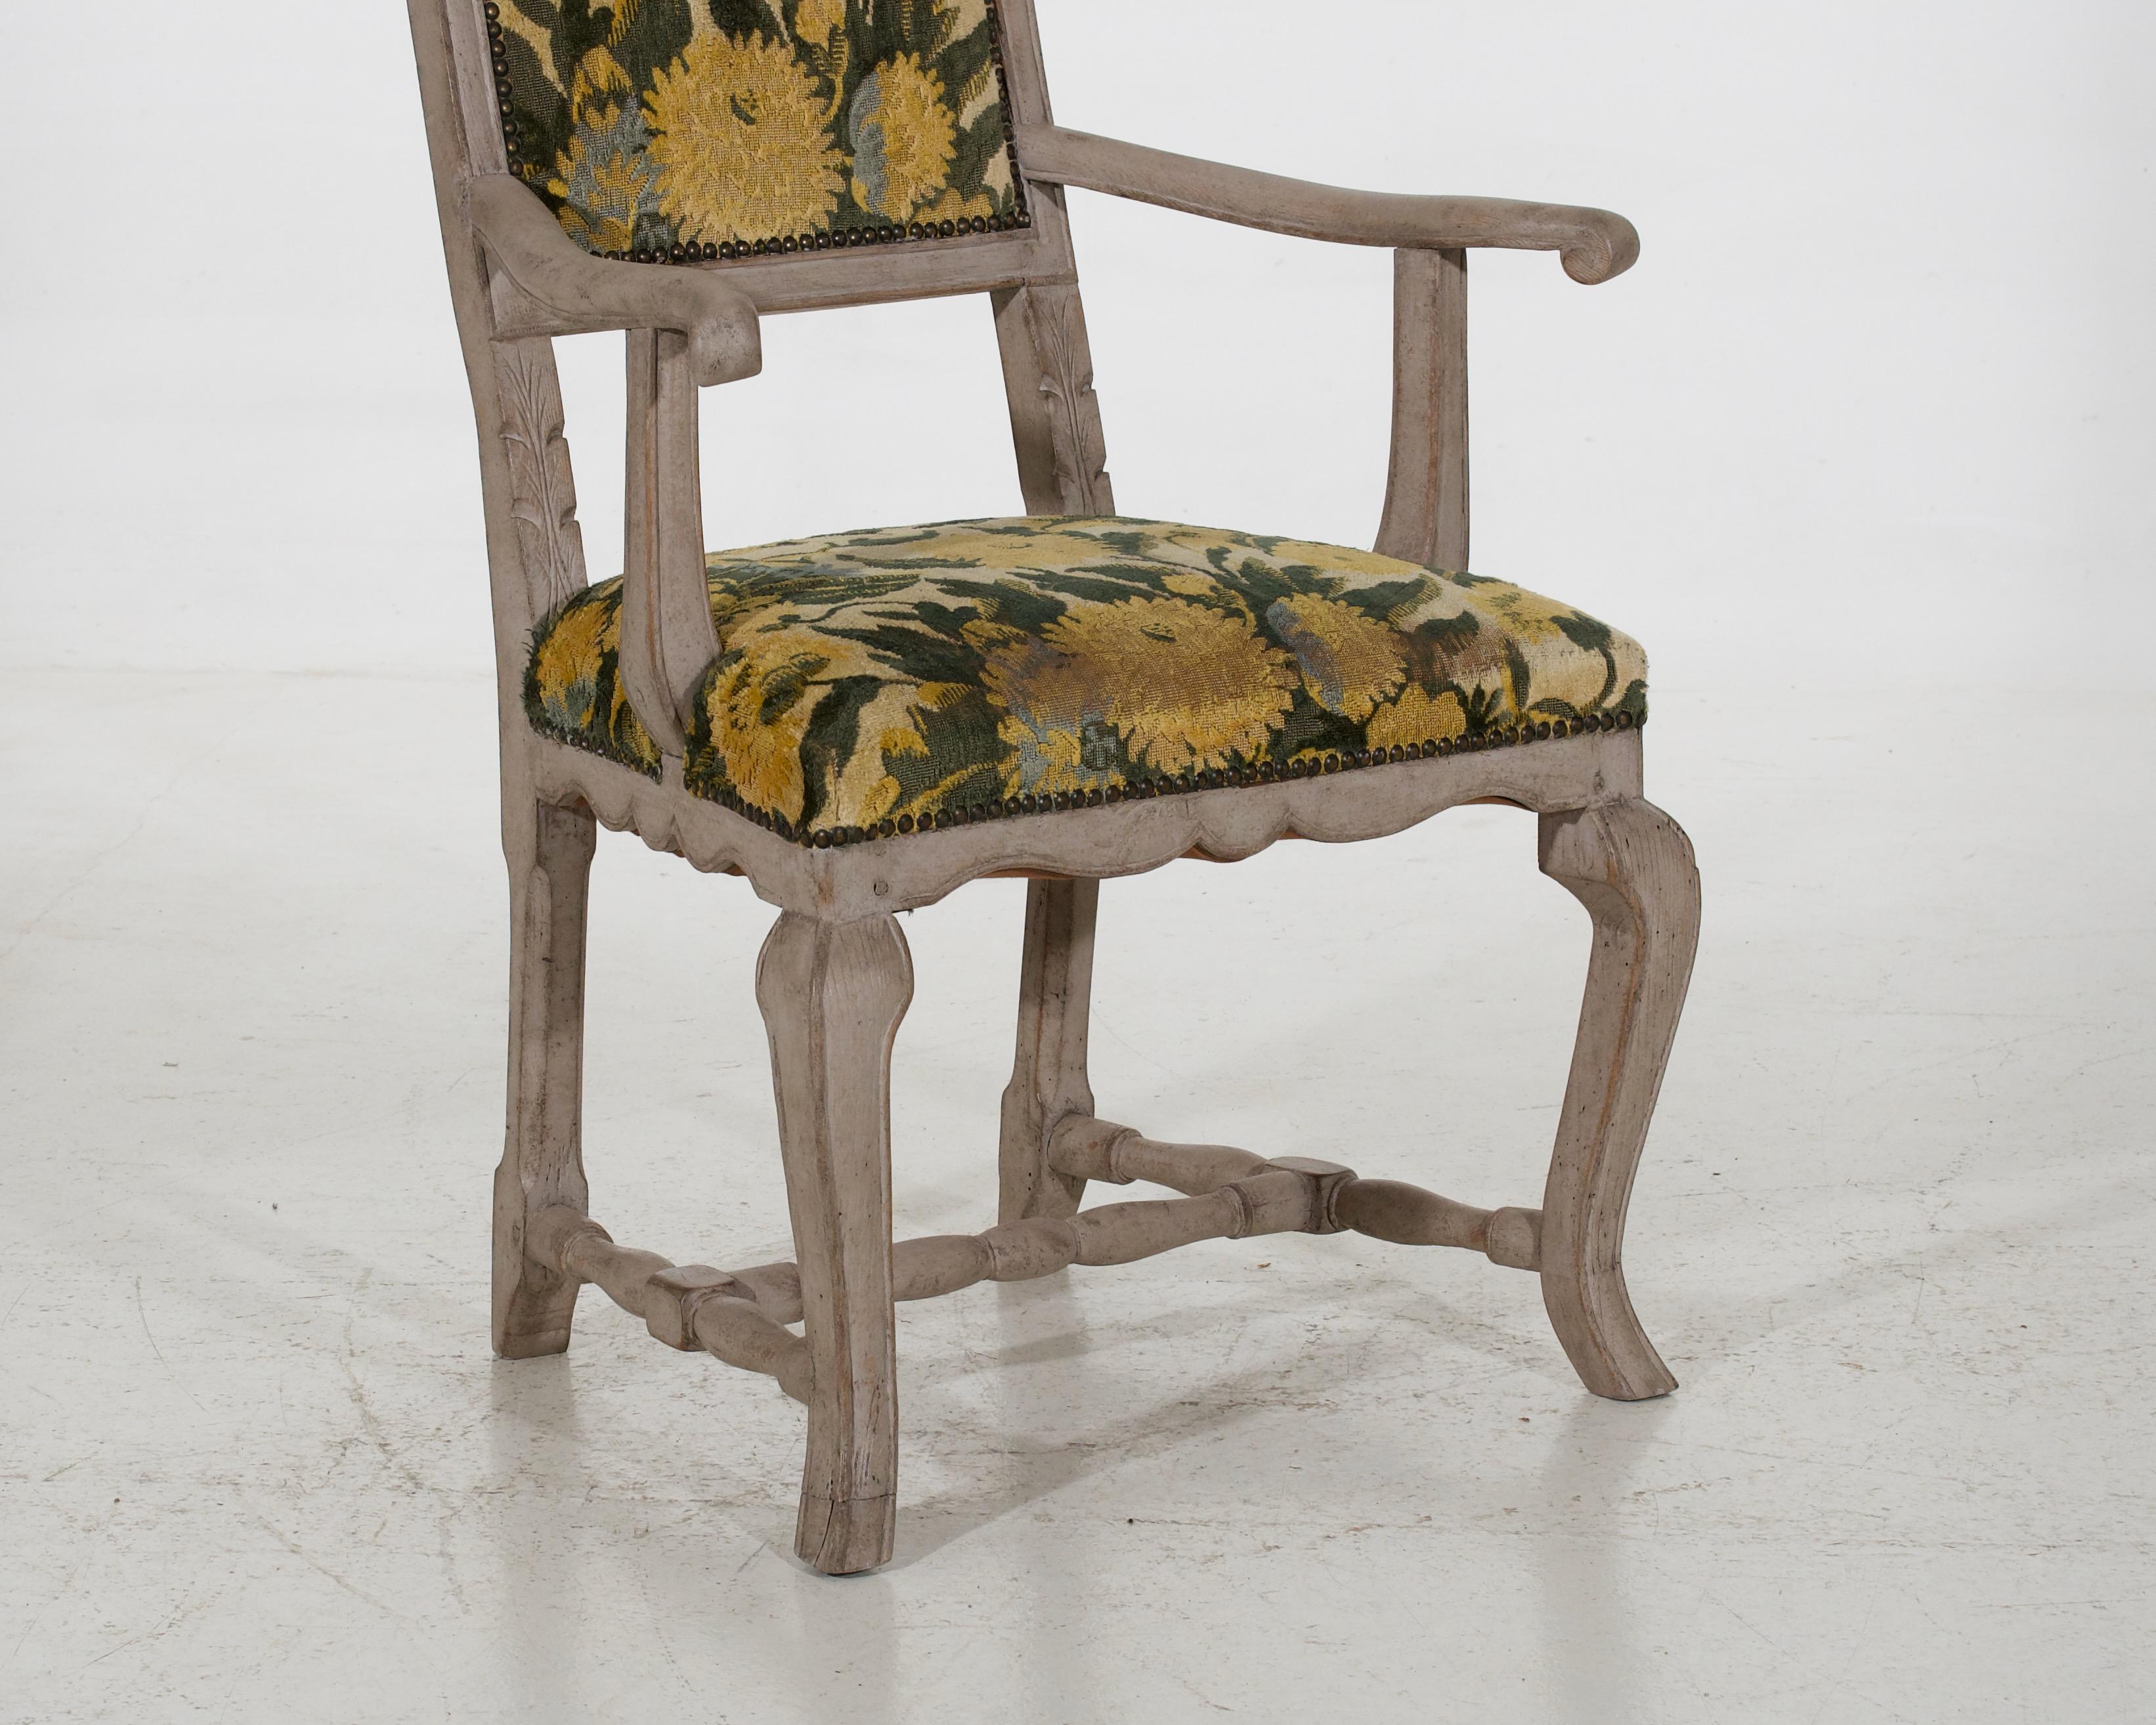 Rare Swedish wing-back chairs, circa 1750.